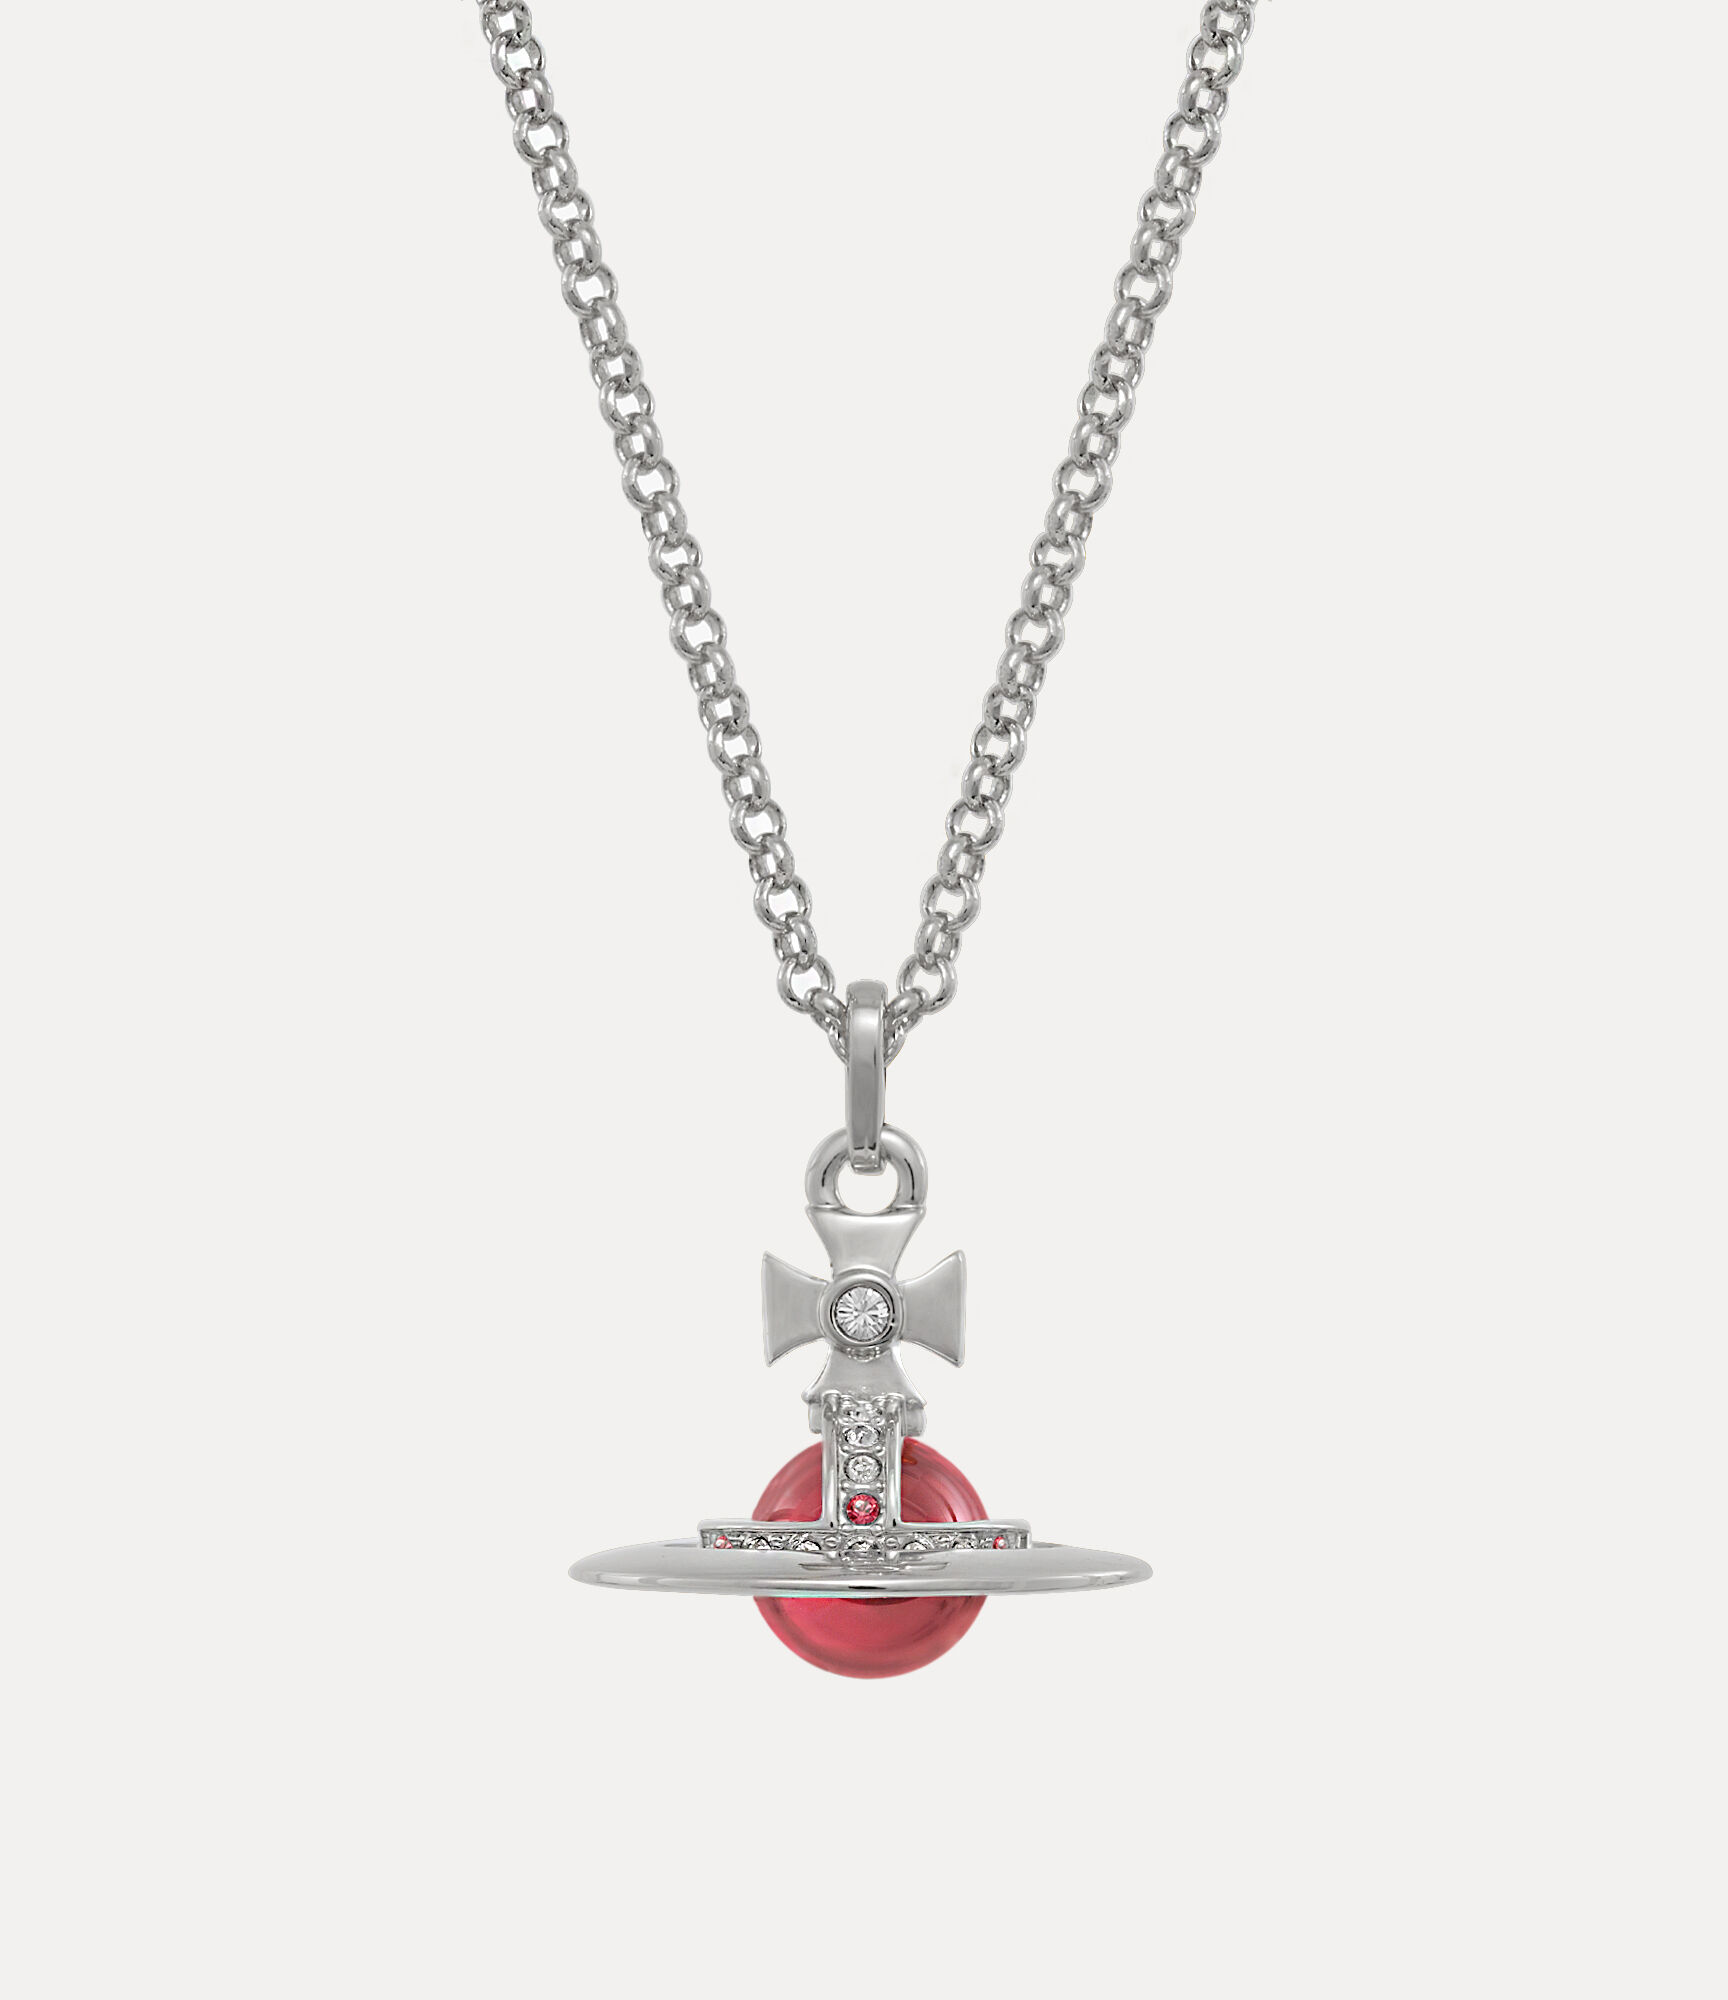 Necklaces: Shop Gold & Diamond Necklace Designs for Women Online | Tanishq